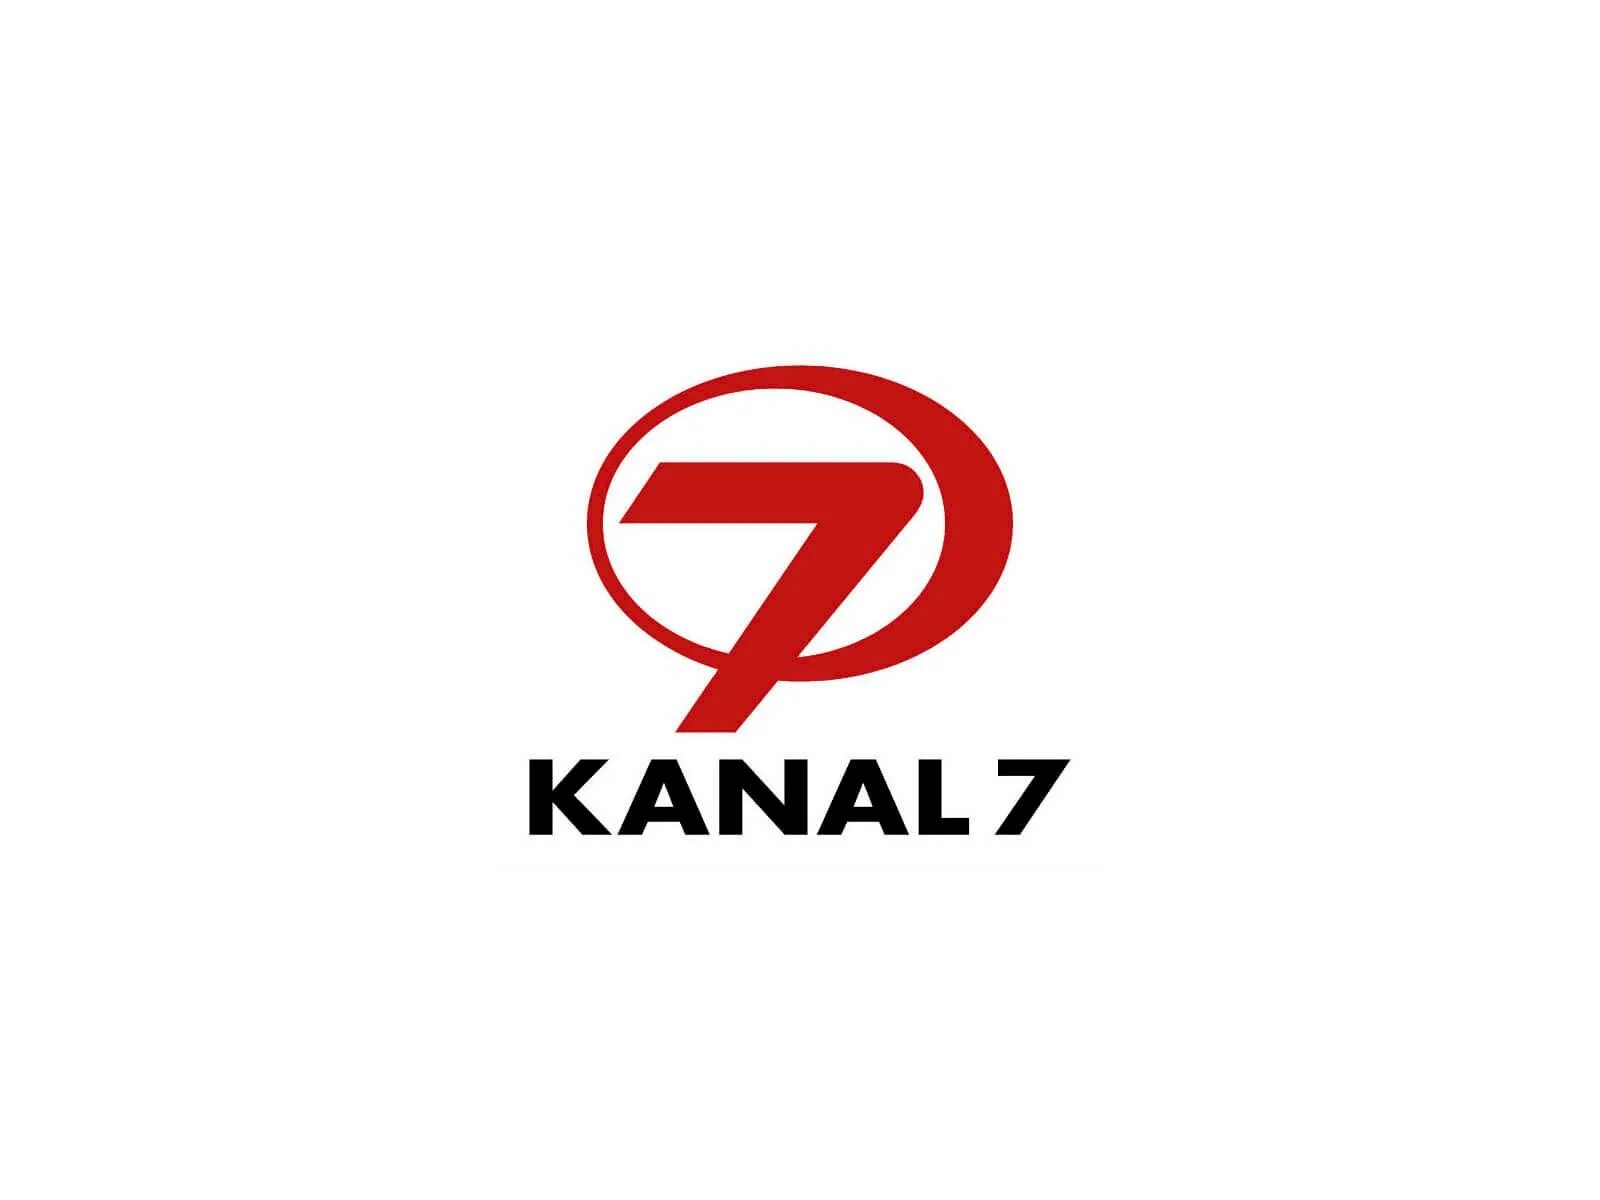 7 Канал. 7 Канал логотип. Канал d Canli. Logos kanal Azerbaijan.